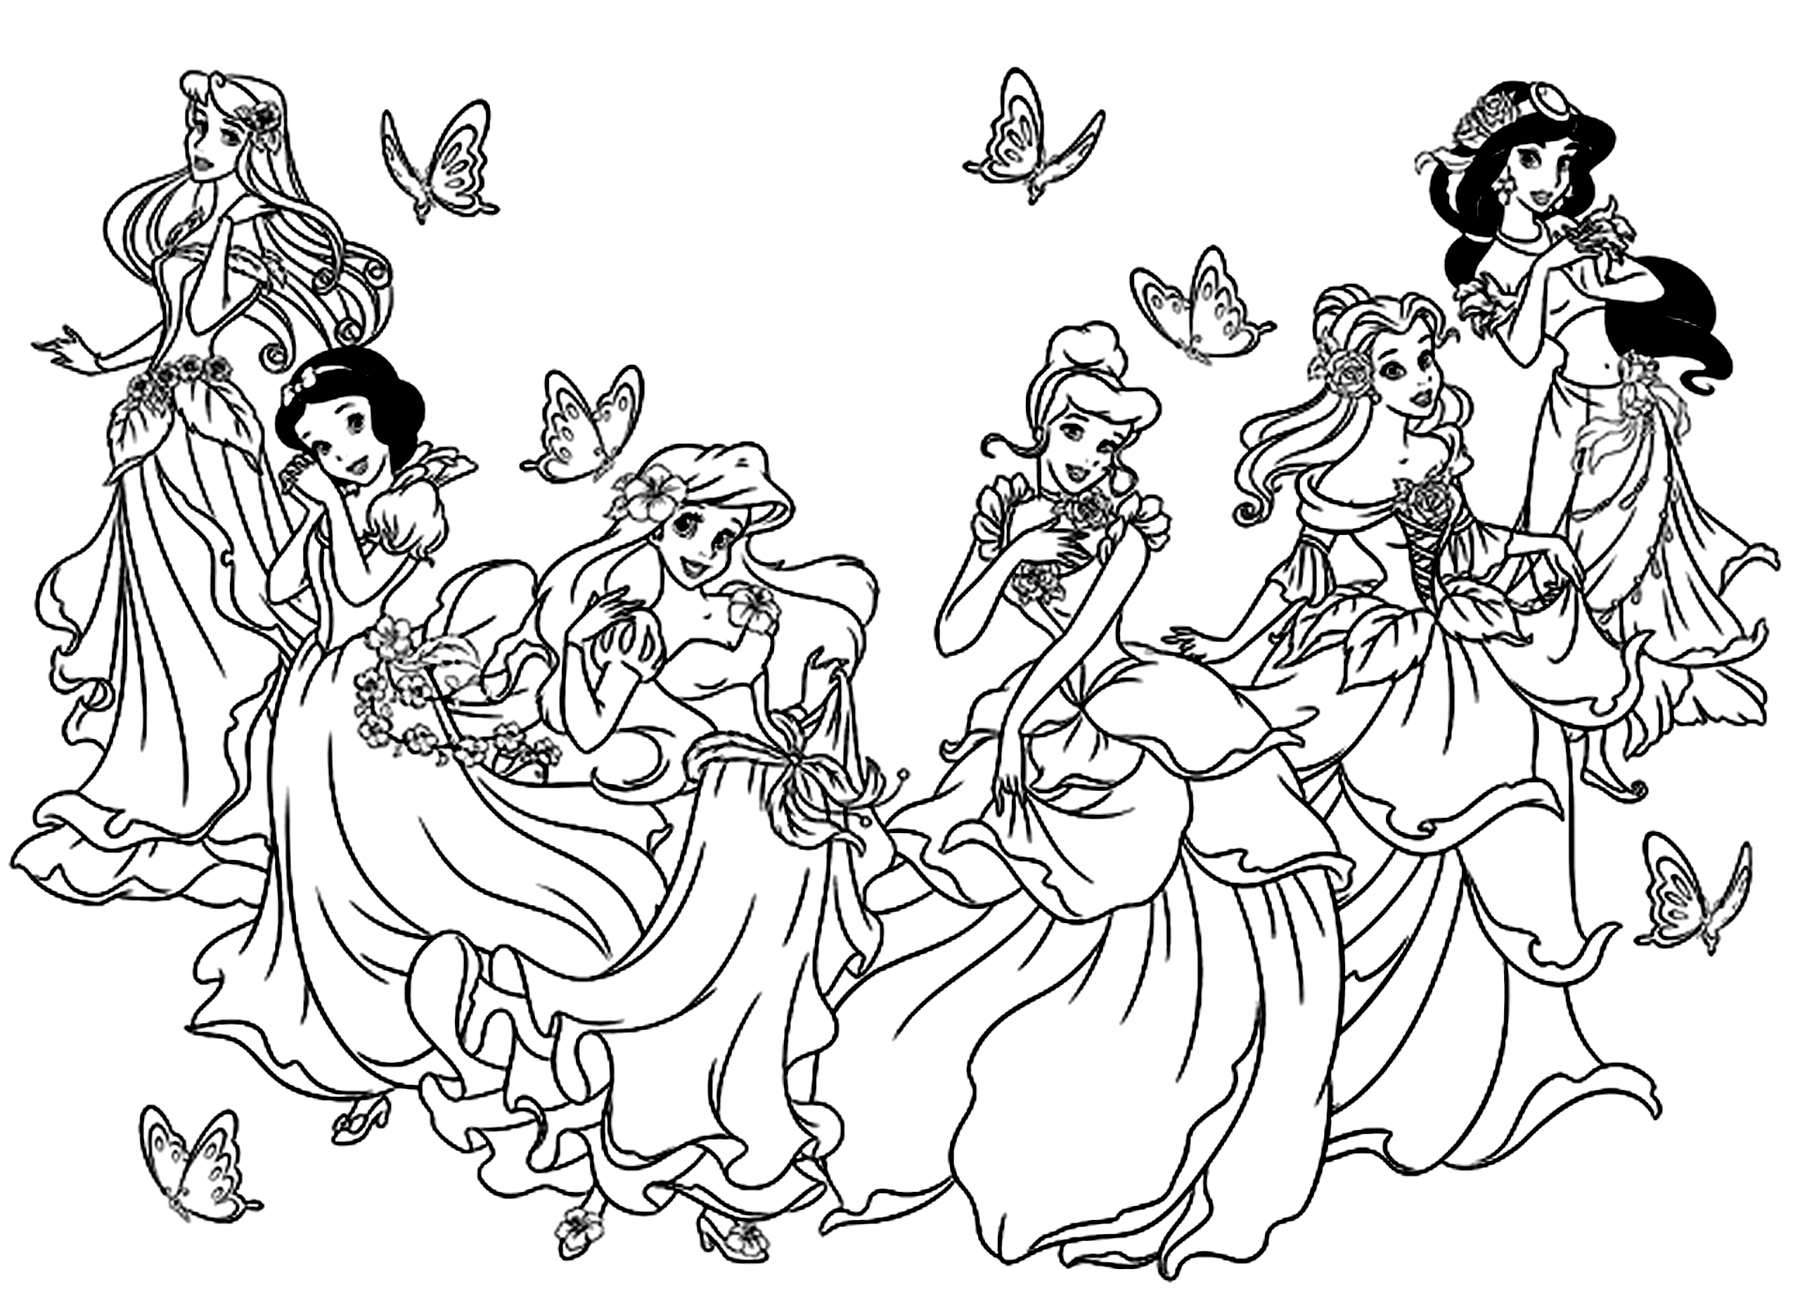 All princesses disney - Return to childhood Adult Coloring ...